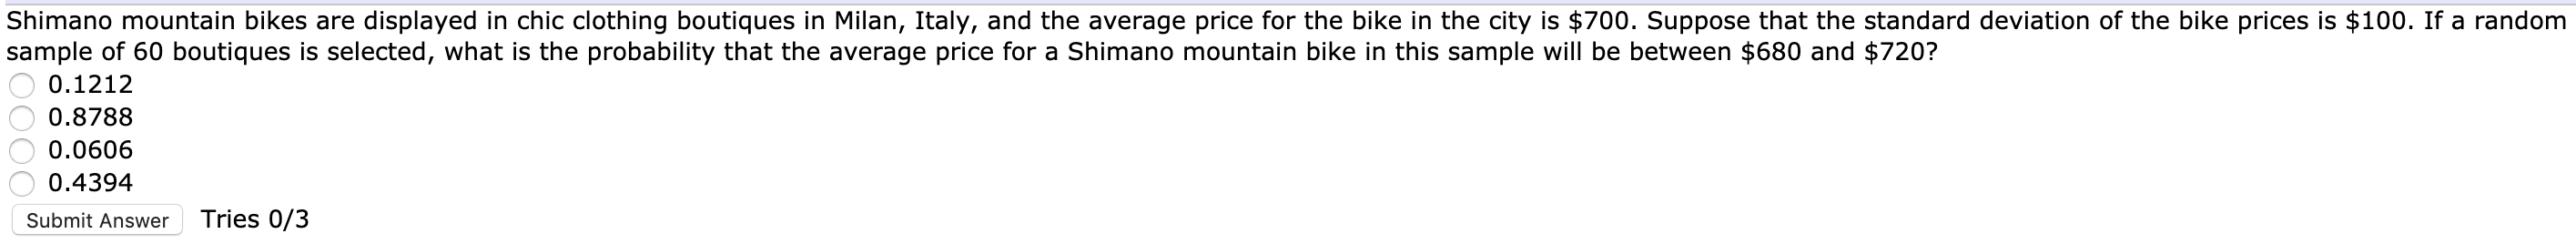 average bike prices